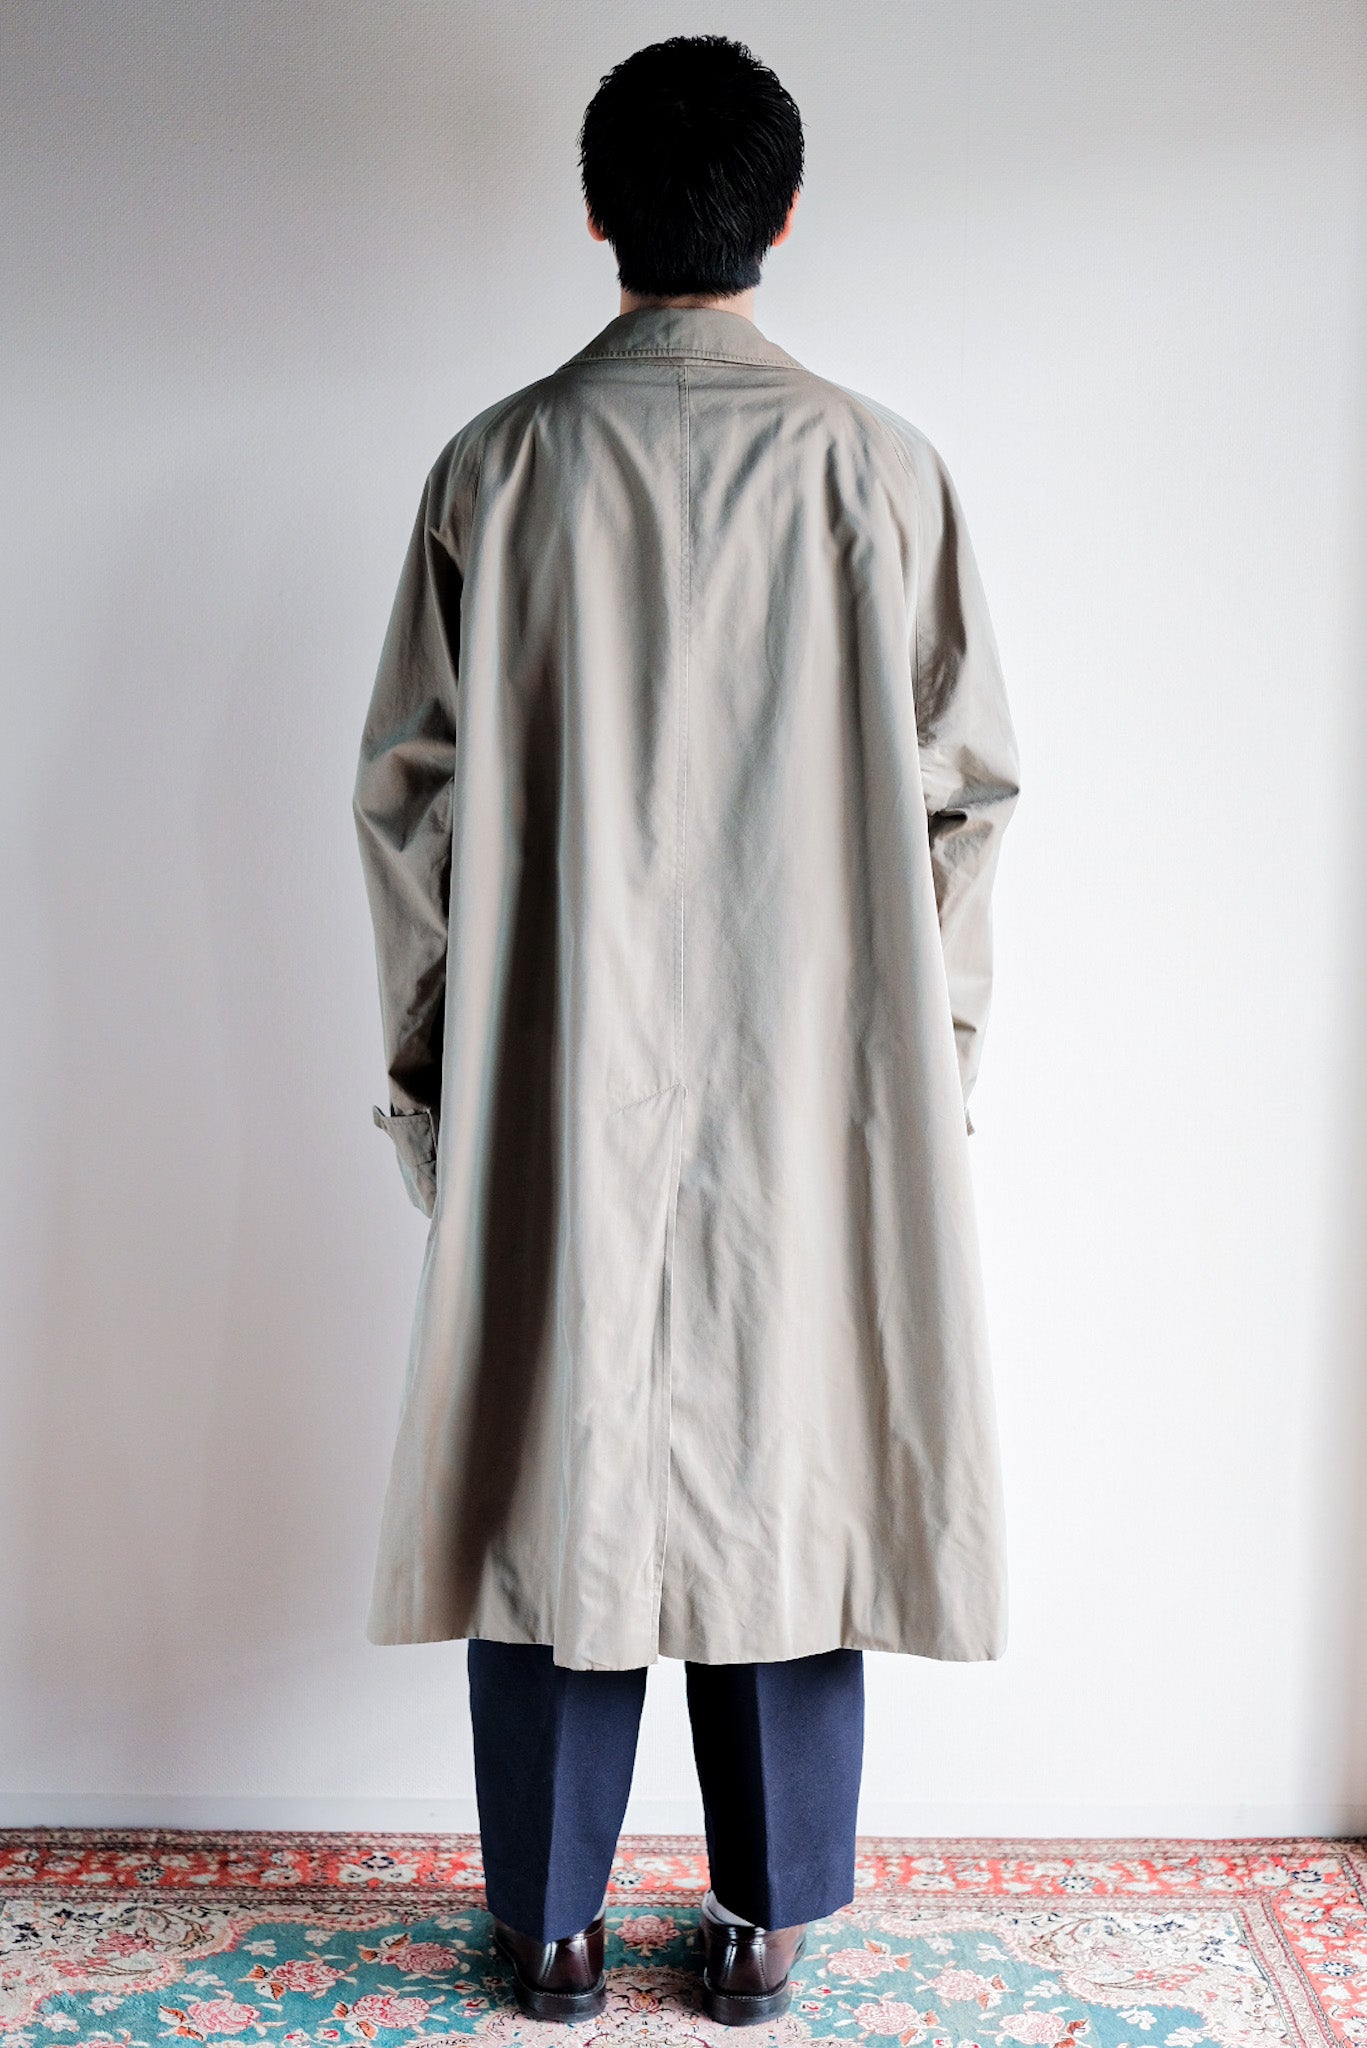 【~80's】Vintage Burberry's Single Raglan Balmacaan Coat C100 Size.58REG "TAMAMUSHI"